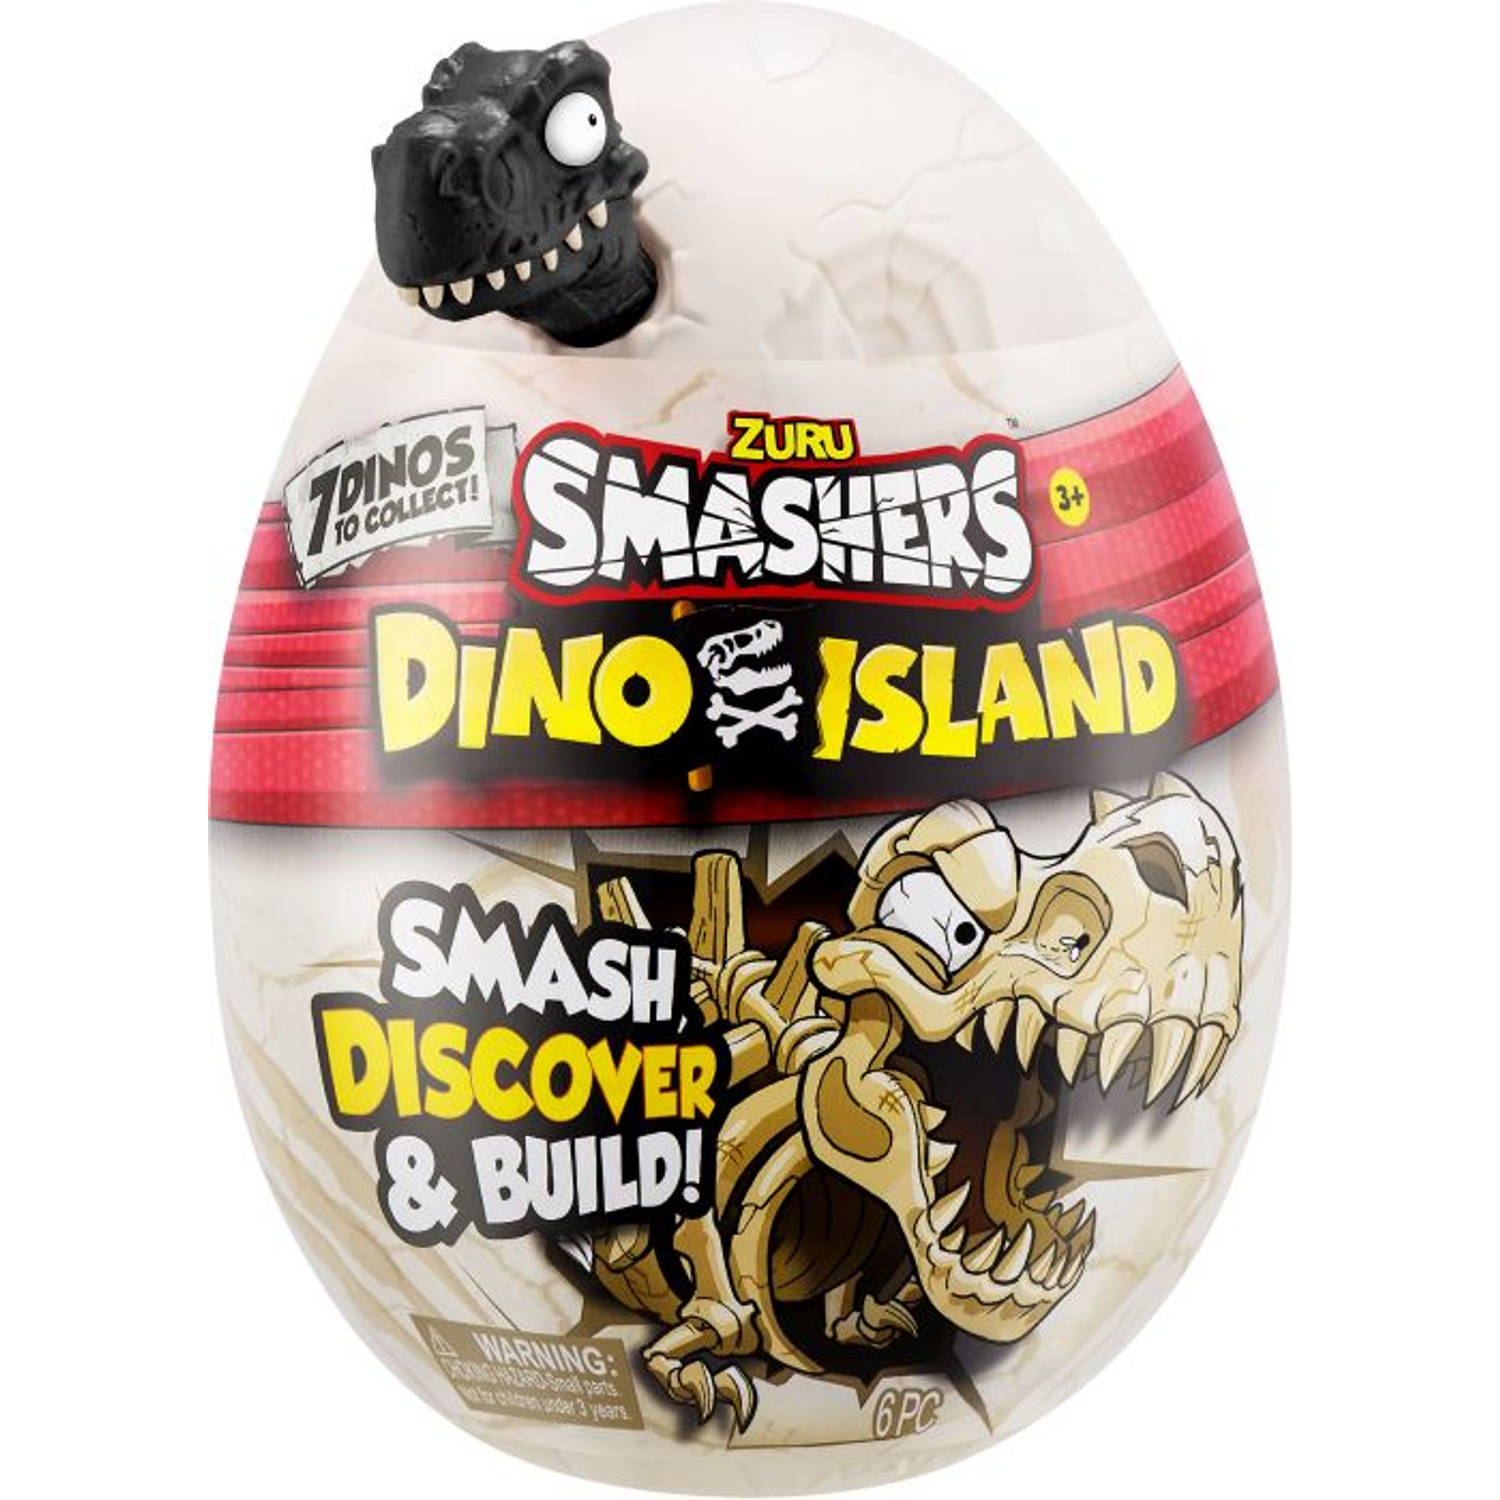 Zuru Smashers Dino Island Nano Egg - 6 verassingen - Met slijm